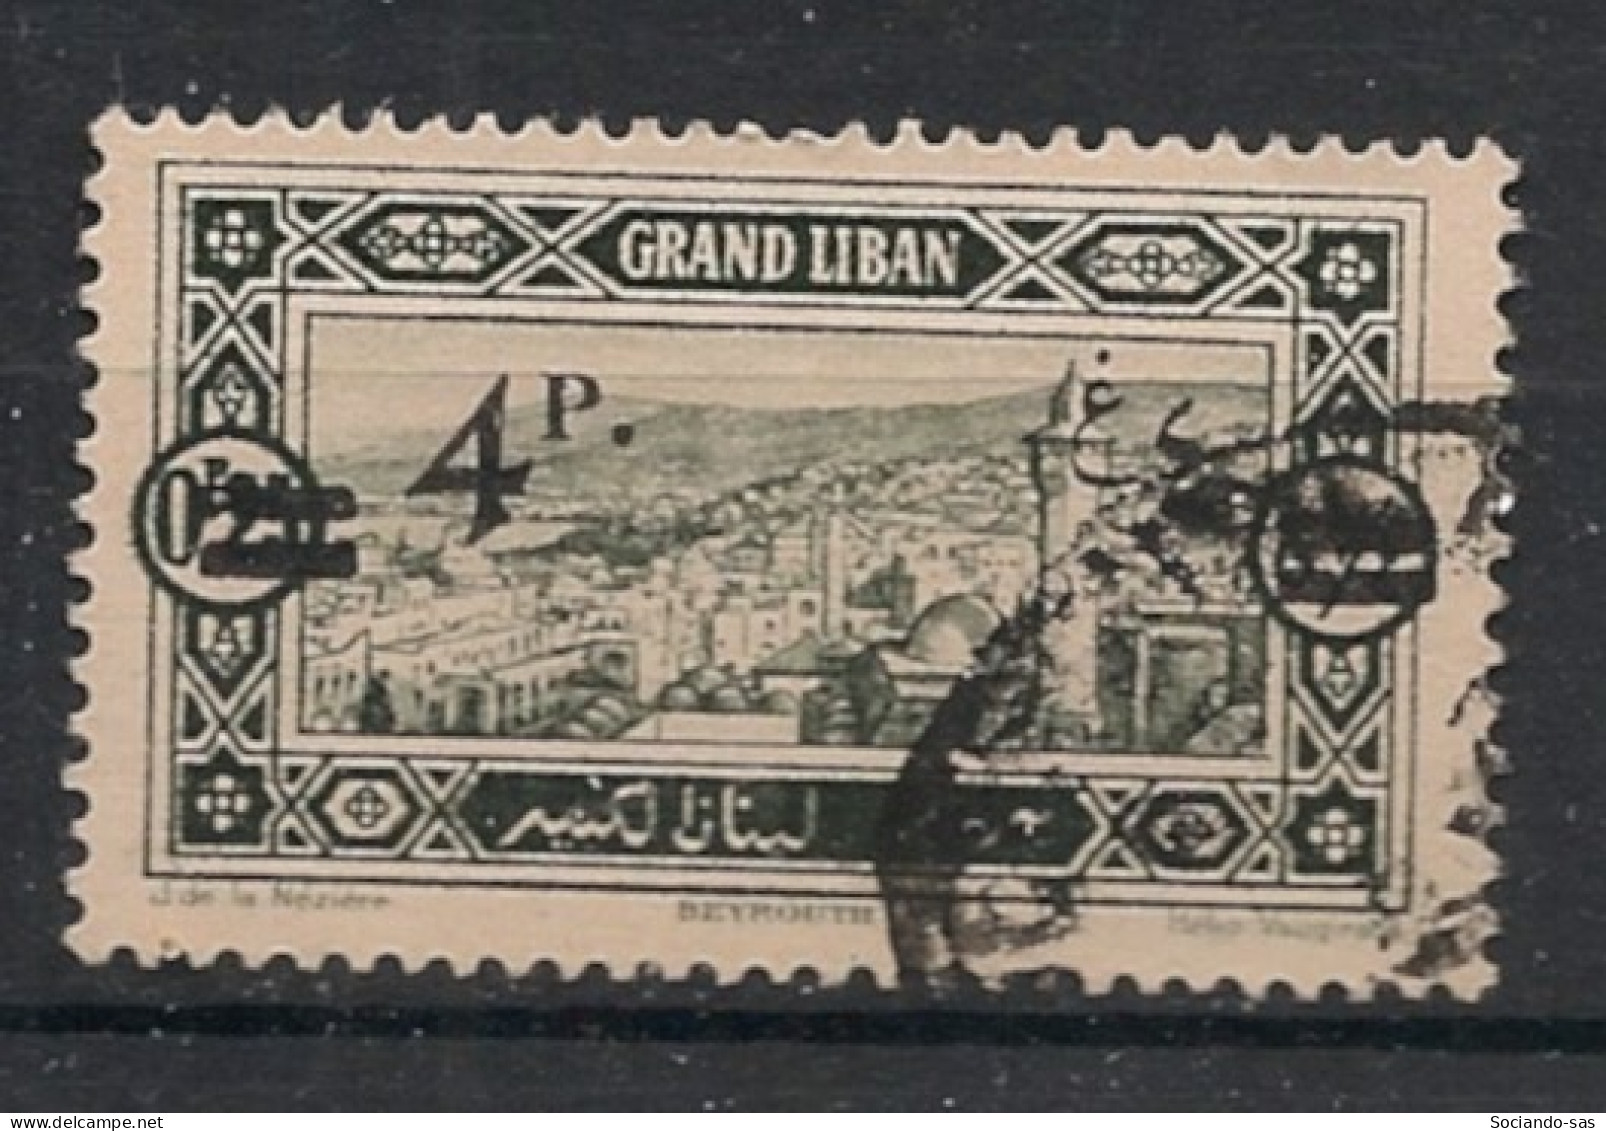 GRAND LIBAN - 1926 - N°YT. 76 - 4pi Sur 0pi25 Vert-noir - Oblitéré / Used - Gebraucht